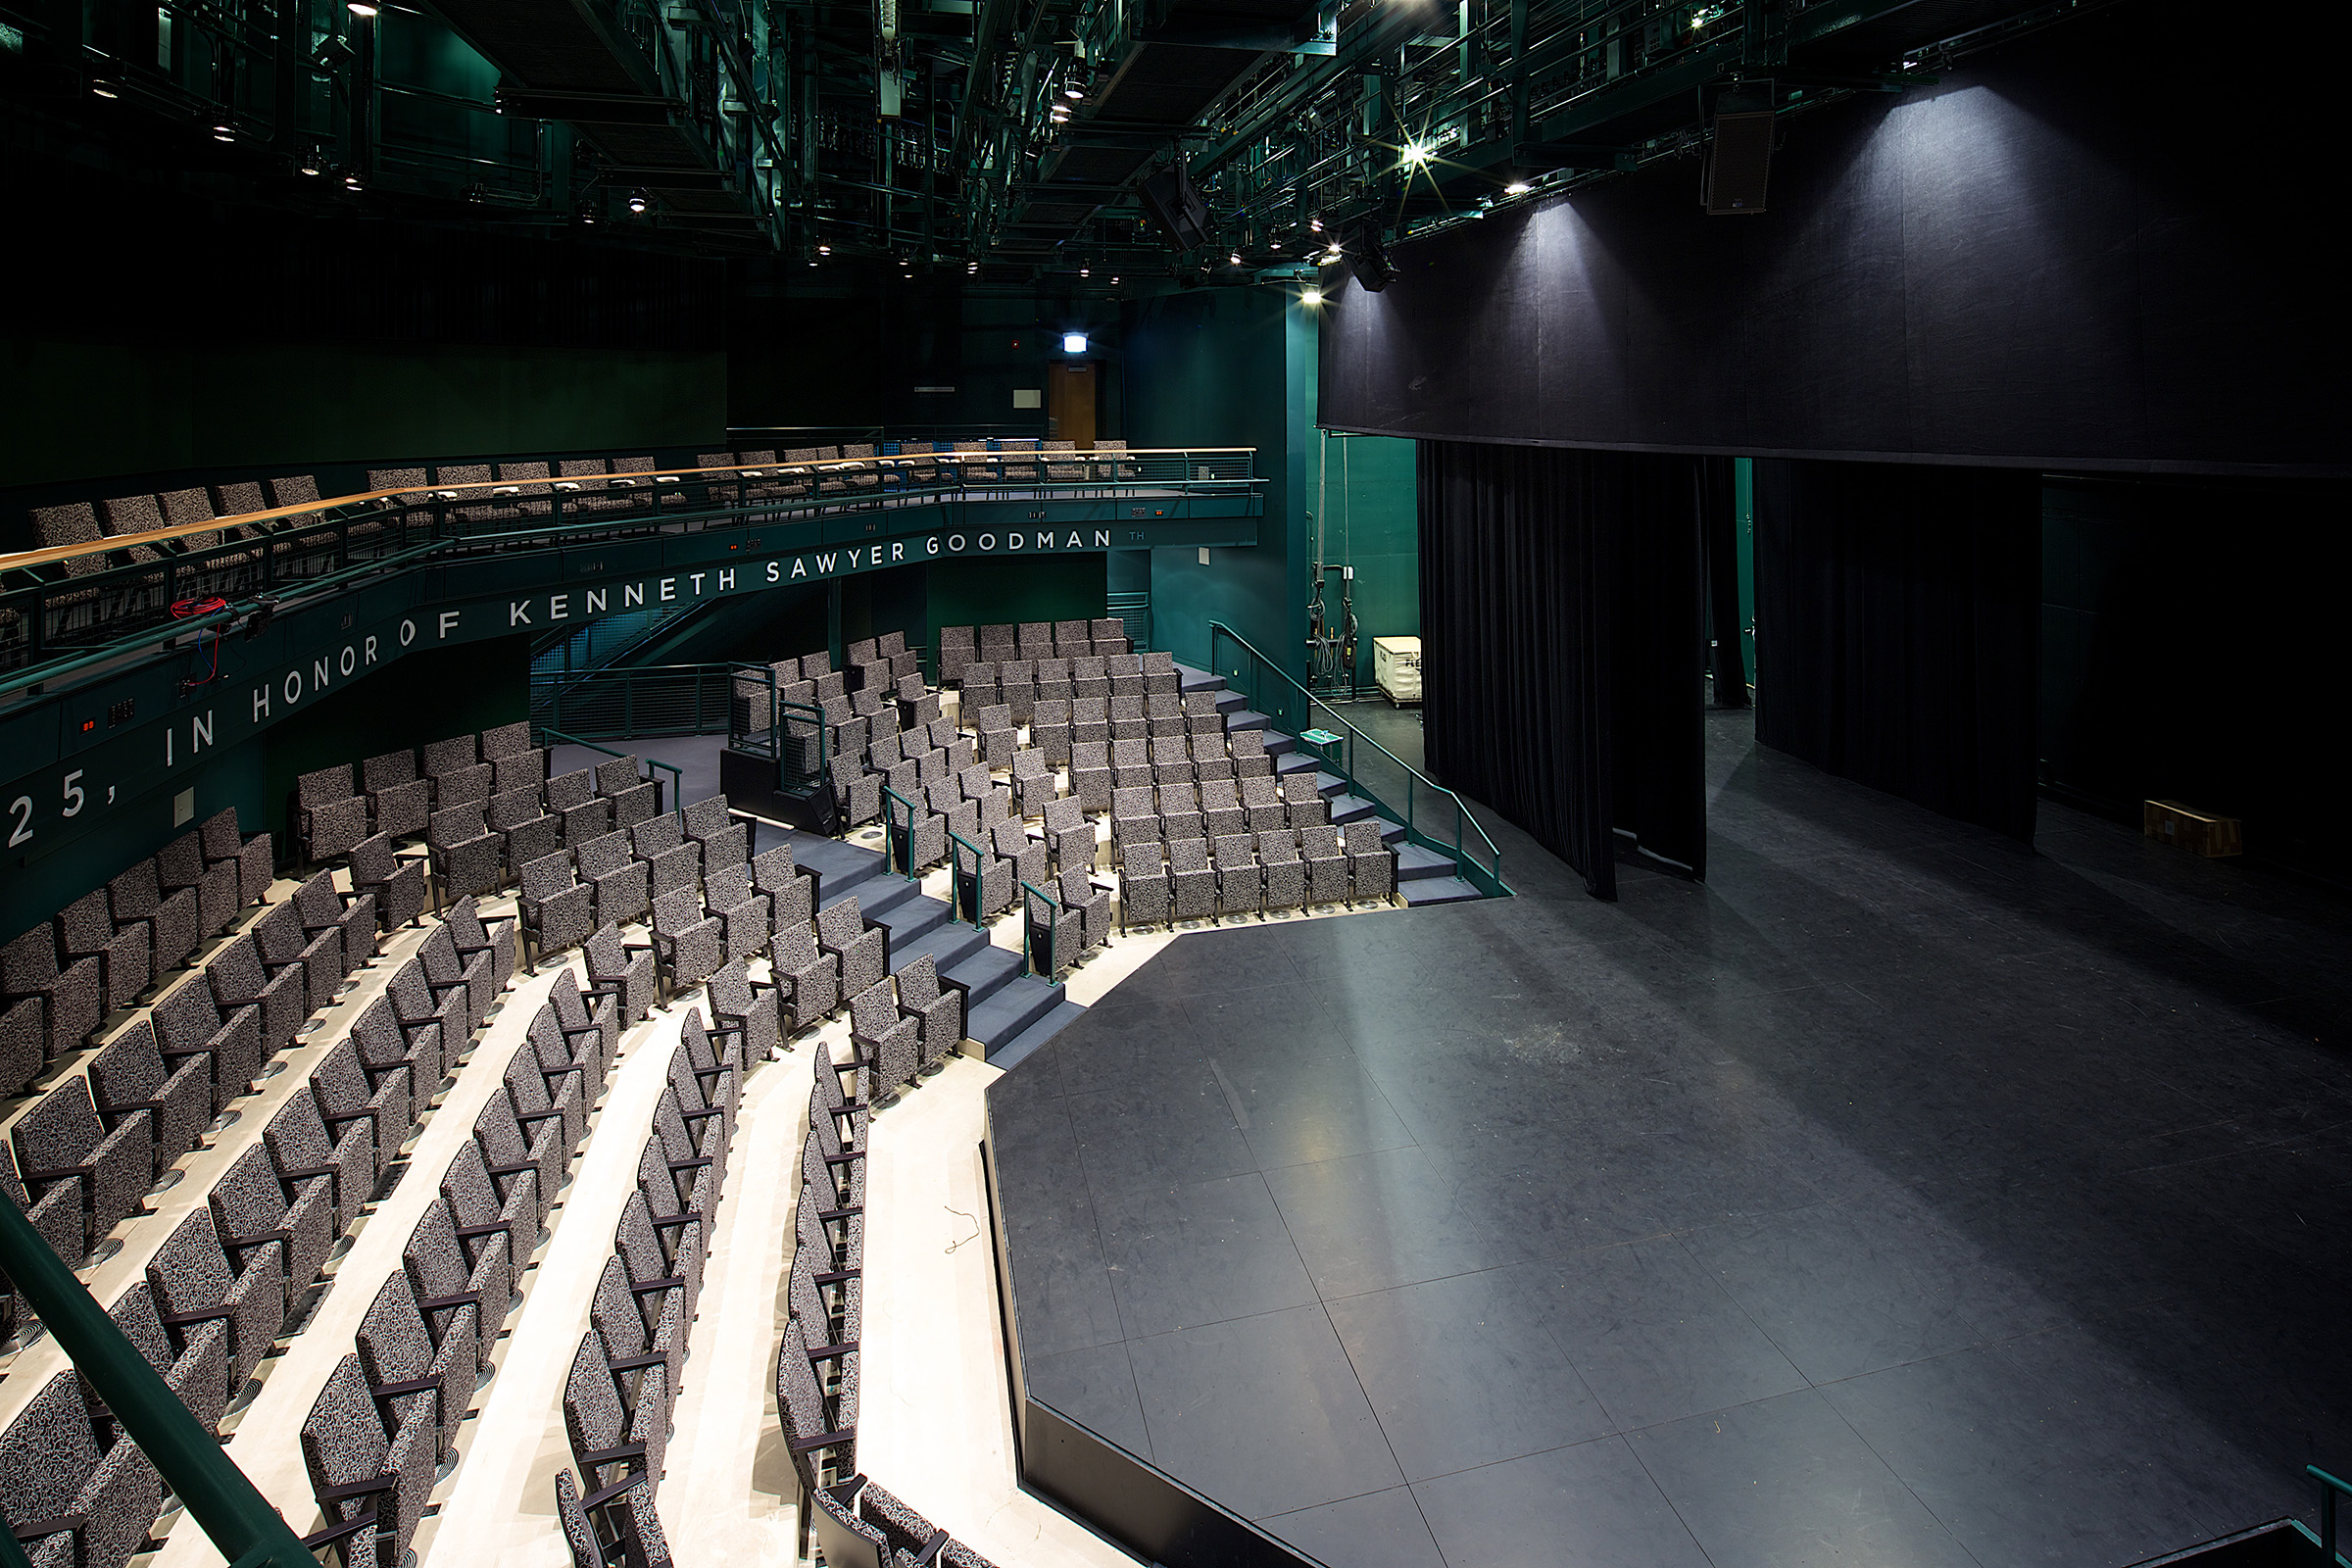 The Theatre School at DePaul University 250-seat thrust theatre